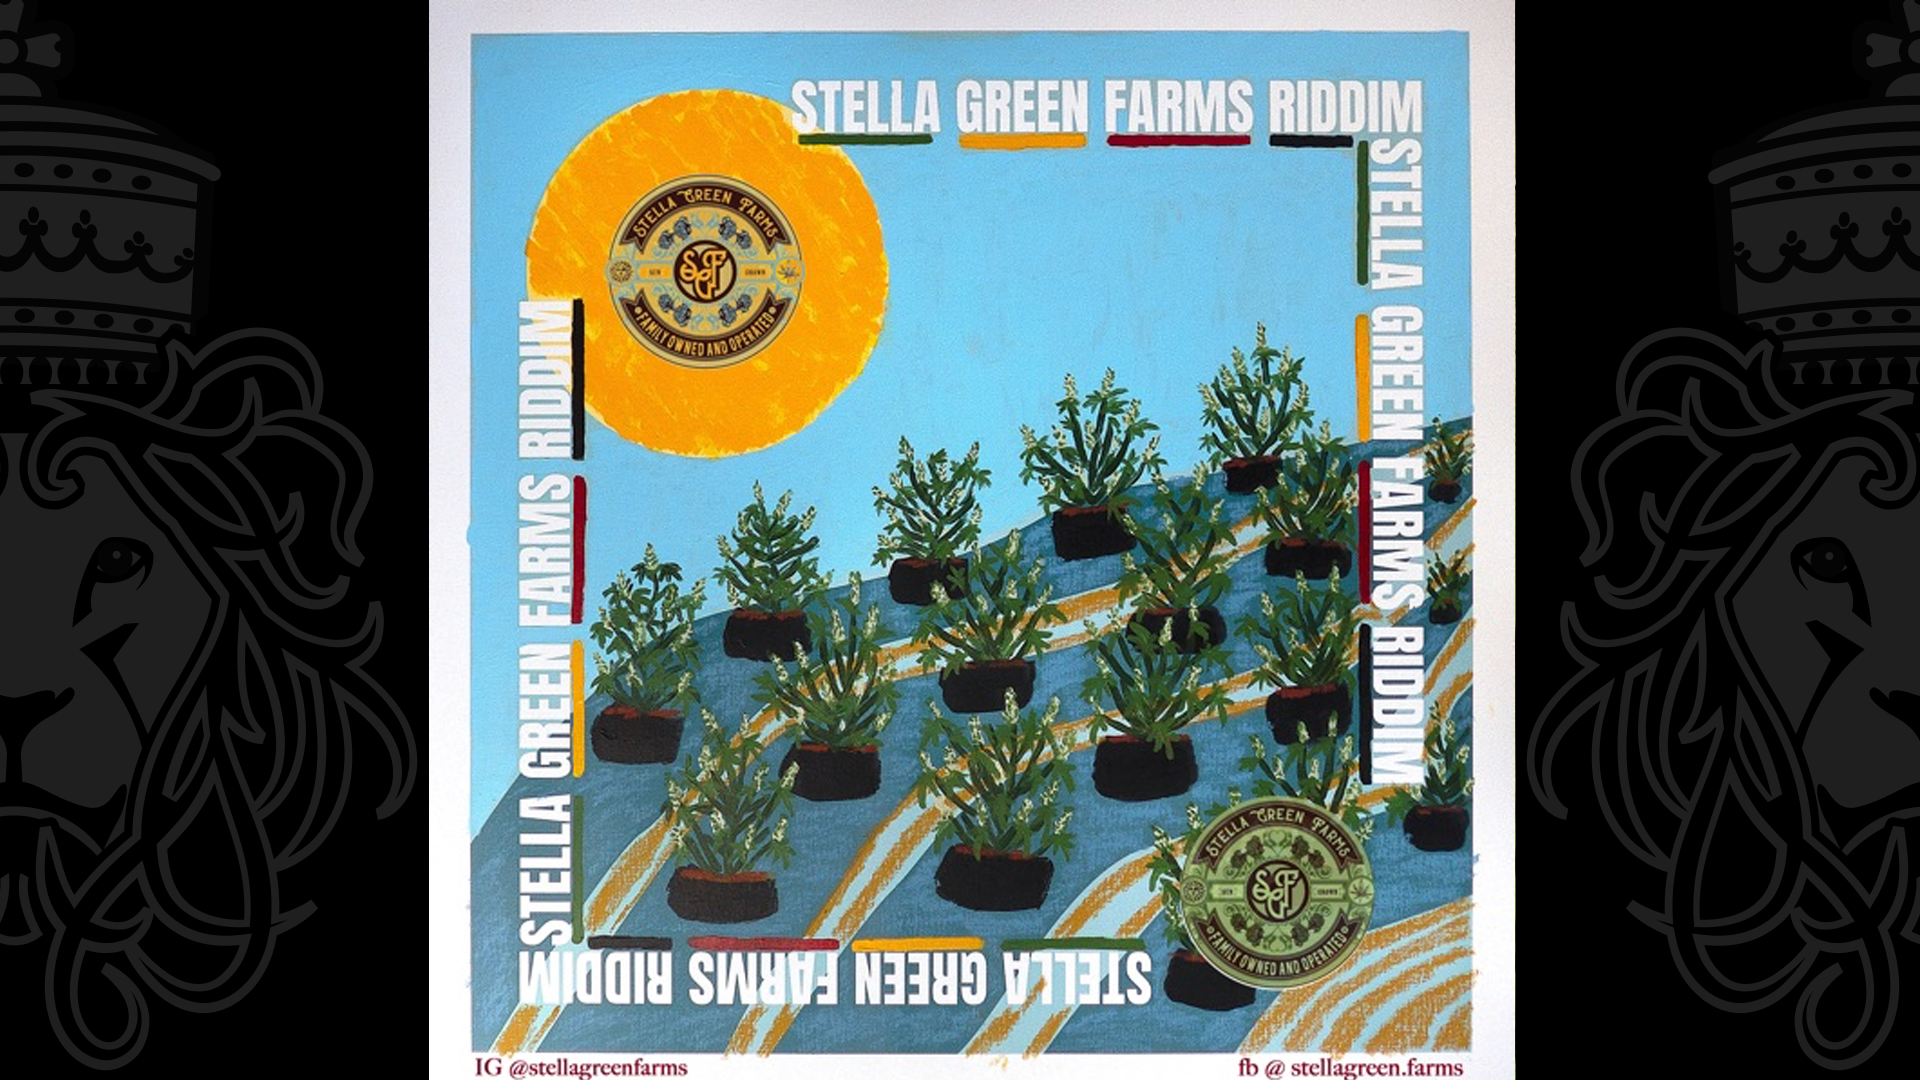 Runkus releases 'General' on Stella Green Farms Riddim